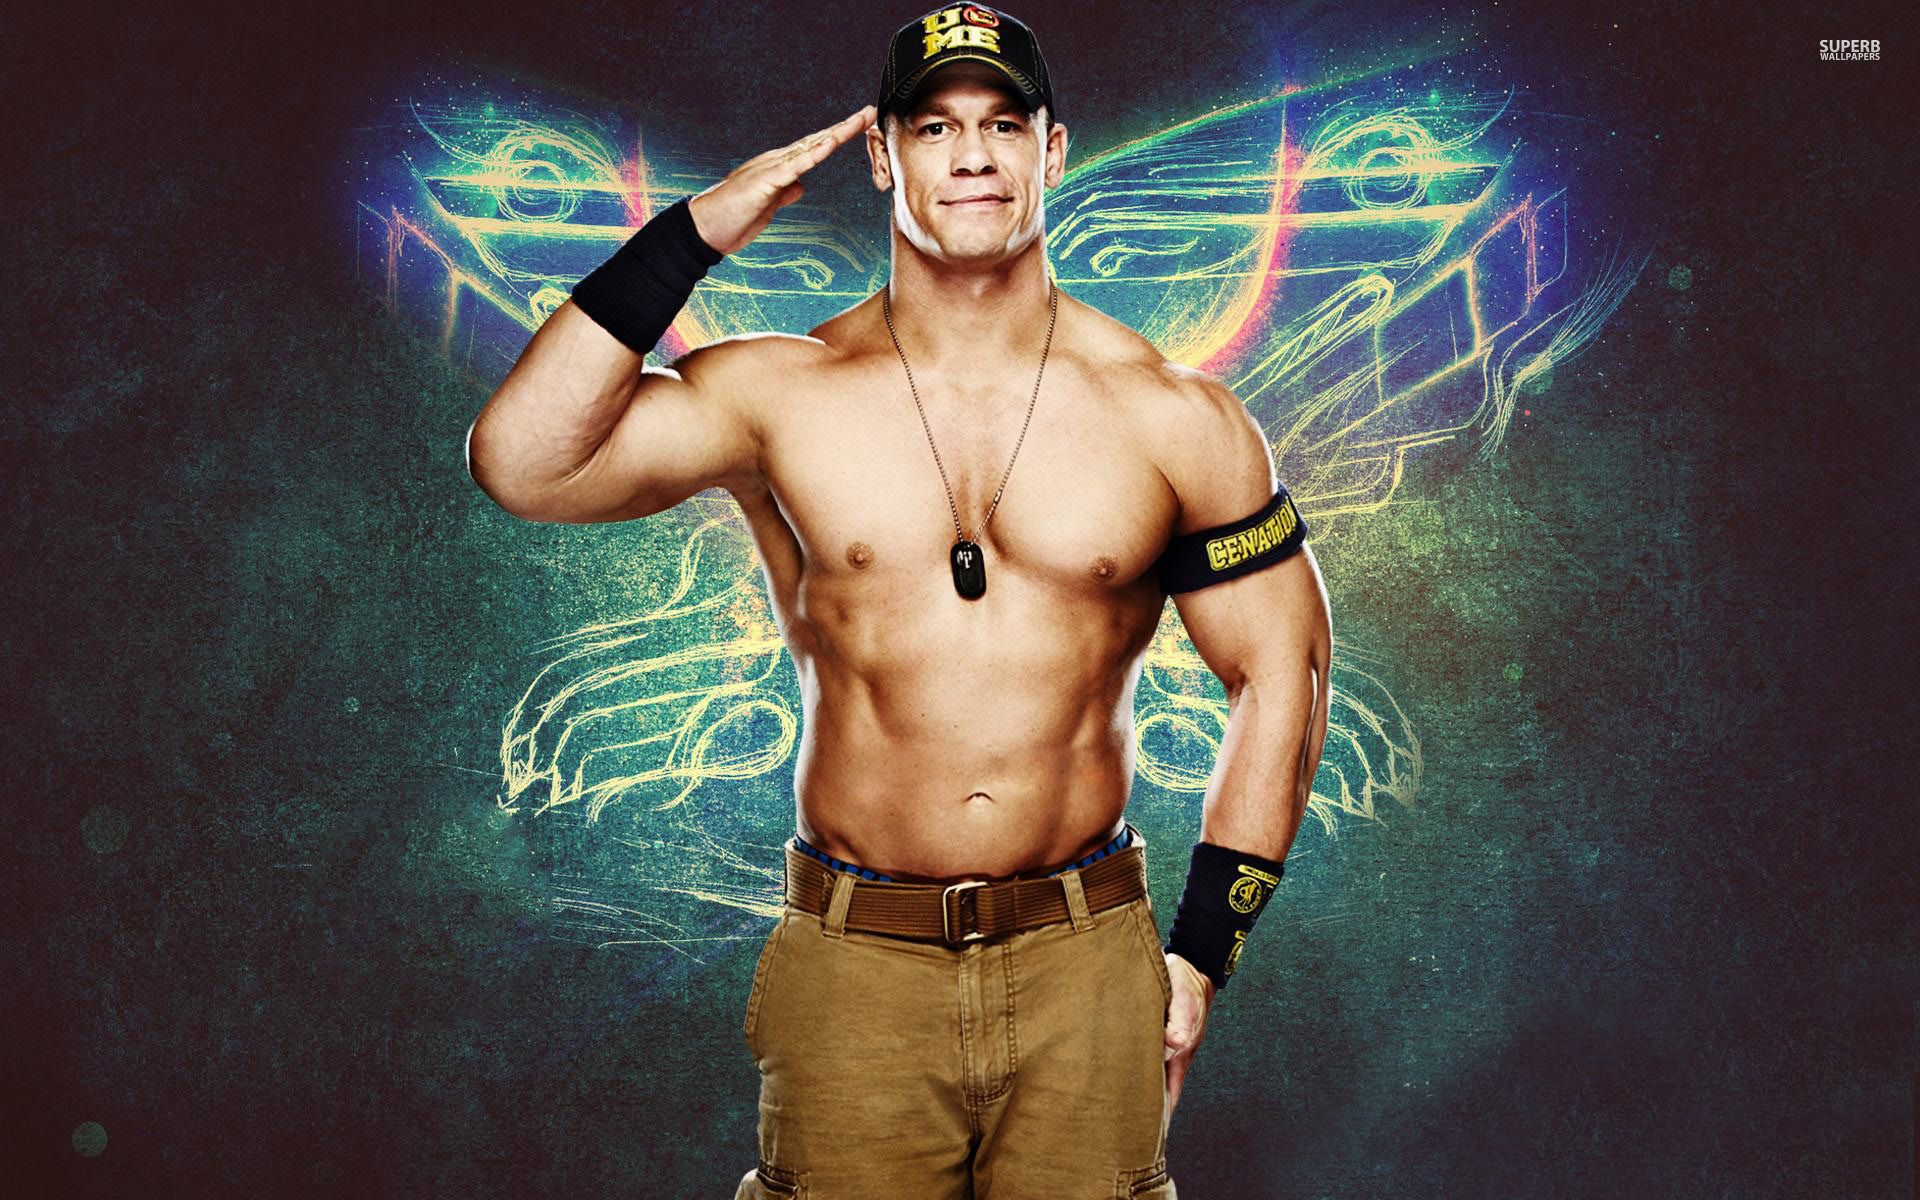 John Cena vs The Rock wallpaper - Sport wallpapers -